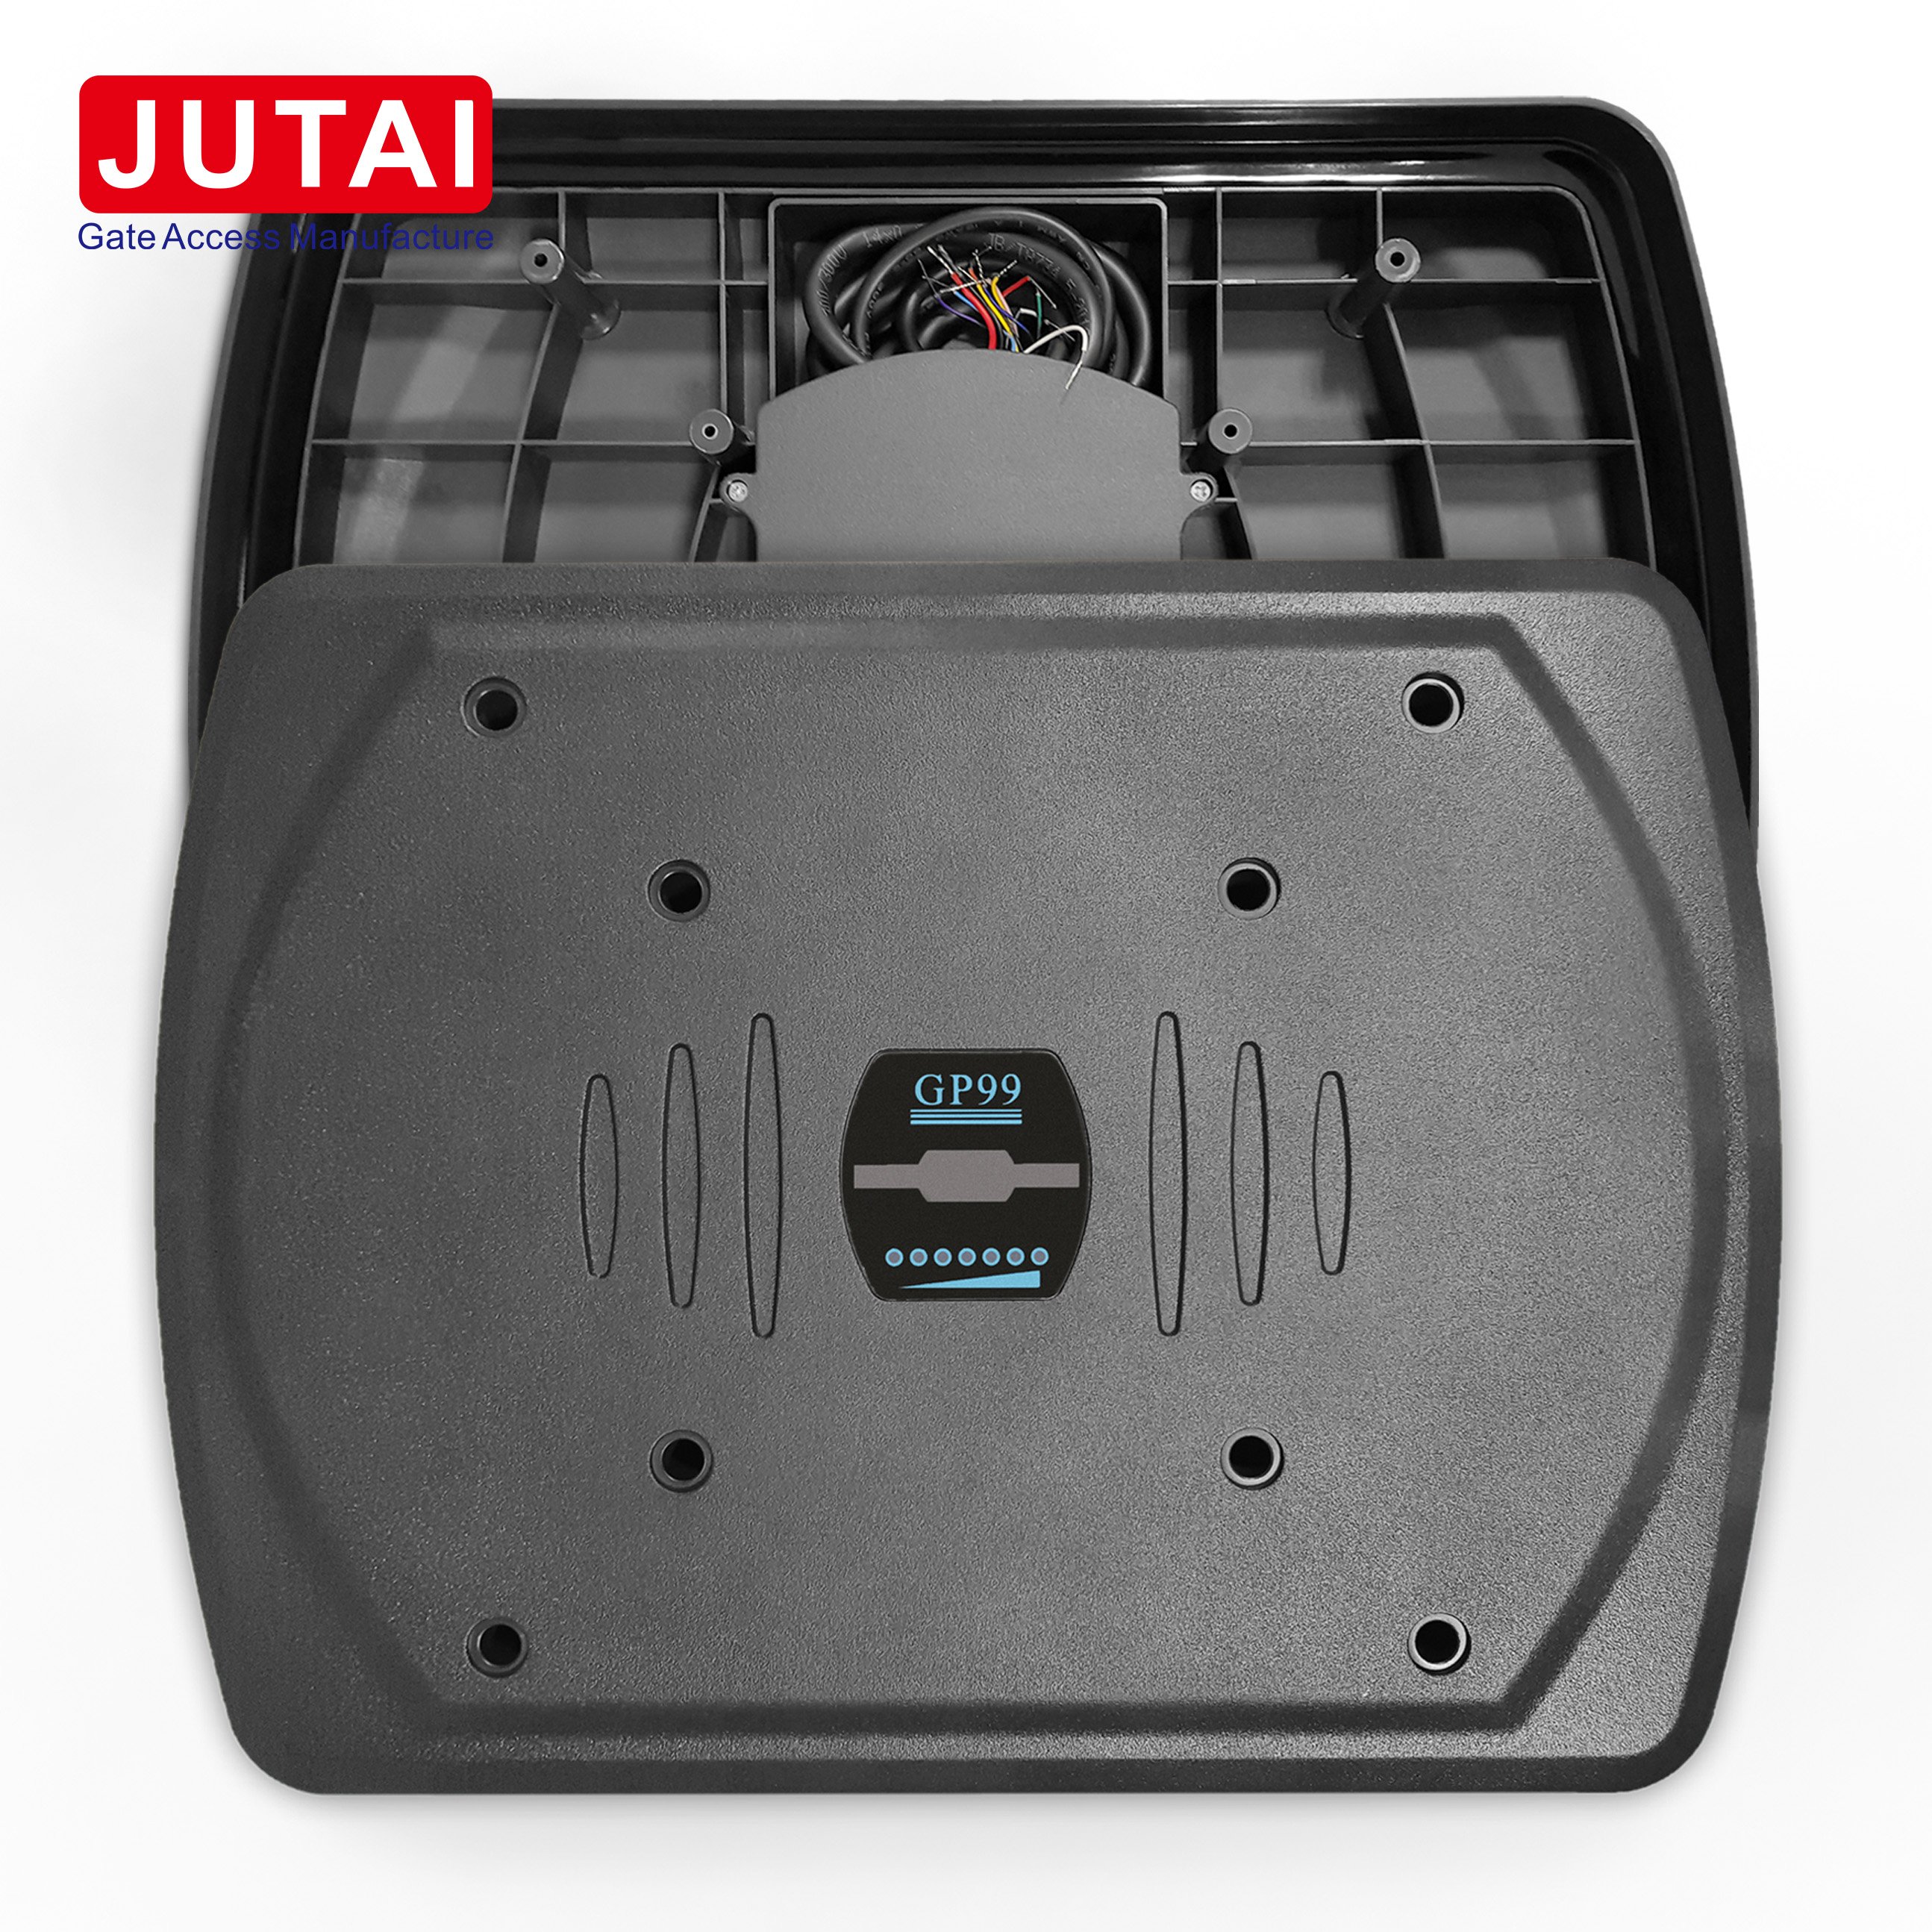 JUTAI GP99 125Khz Proximity Long Range Reader with EM Card